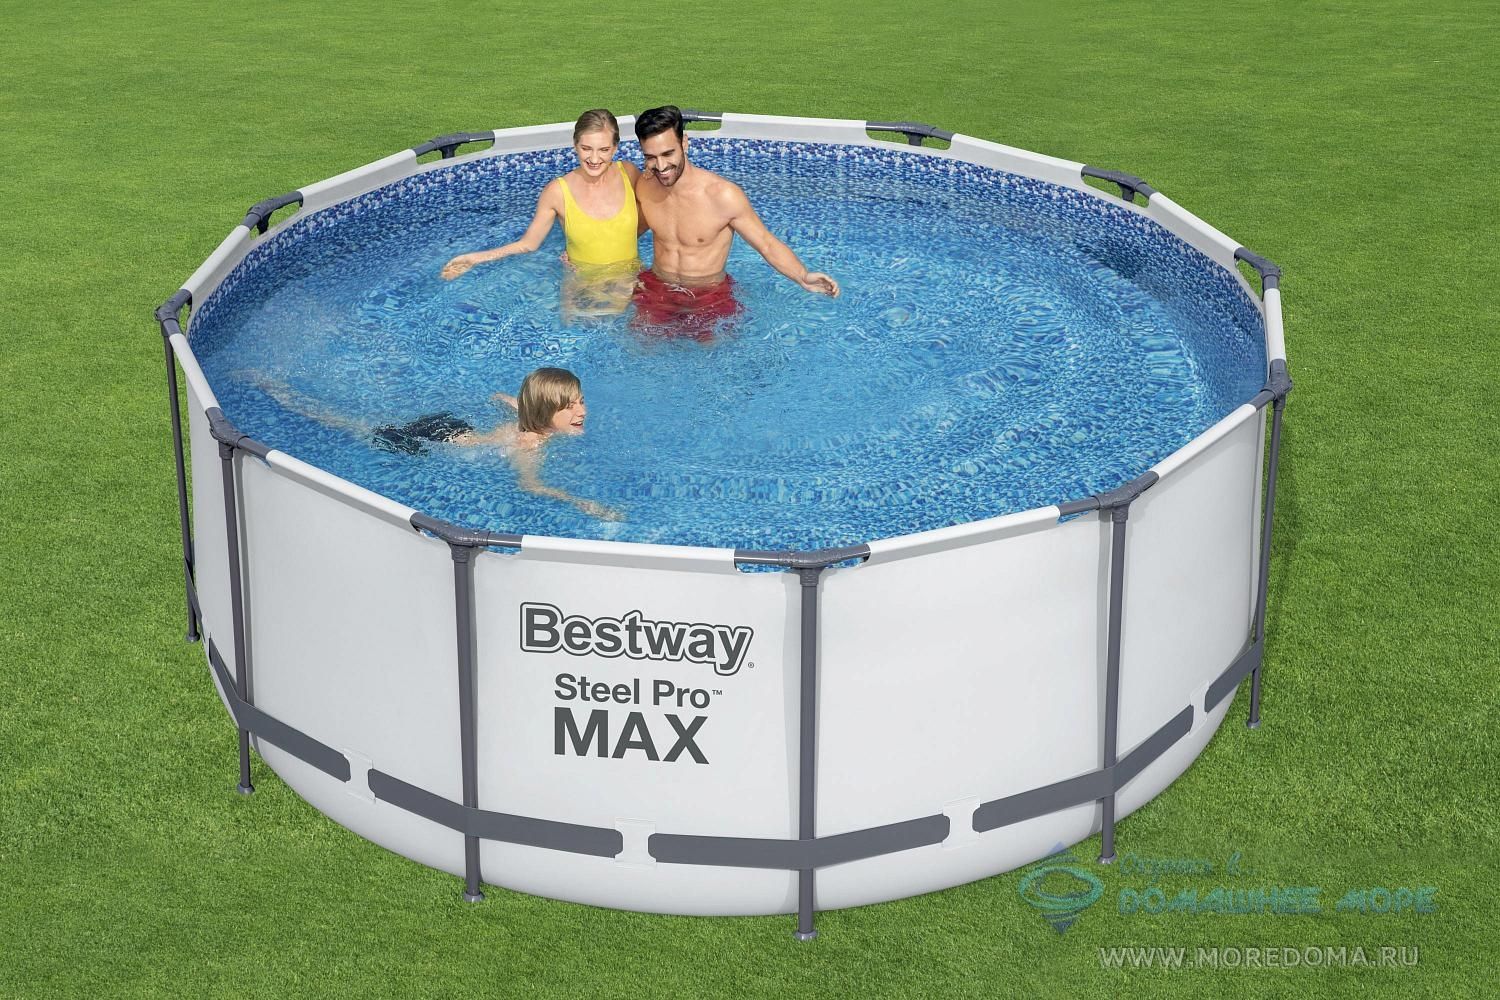 56418 Каркасный бассейн Bestway Round Steel Pro Max (круг) 3.66 х 1.0 м ; артикул 56418 диаметр 3.66 высота 1.0  